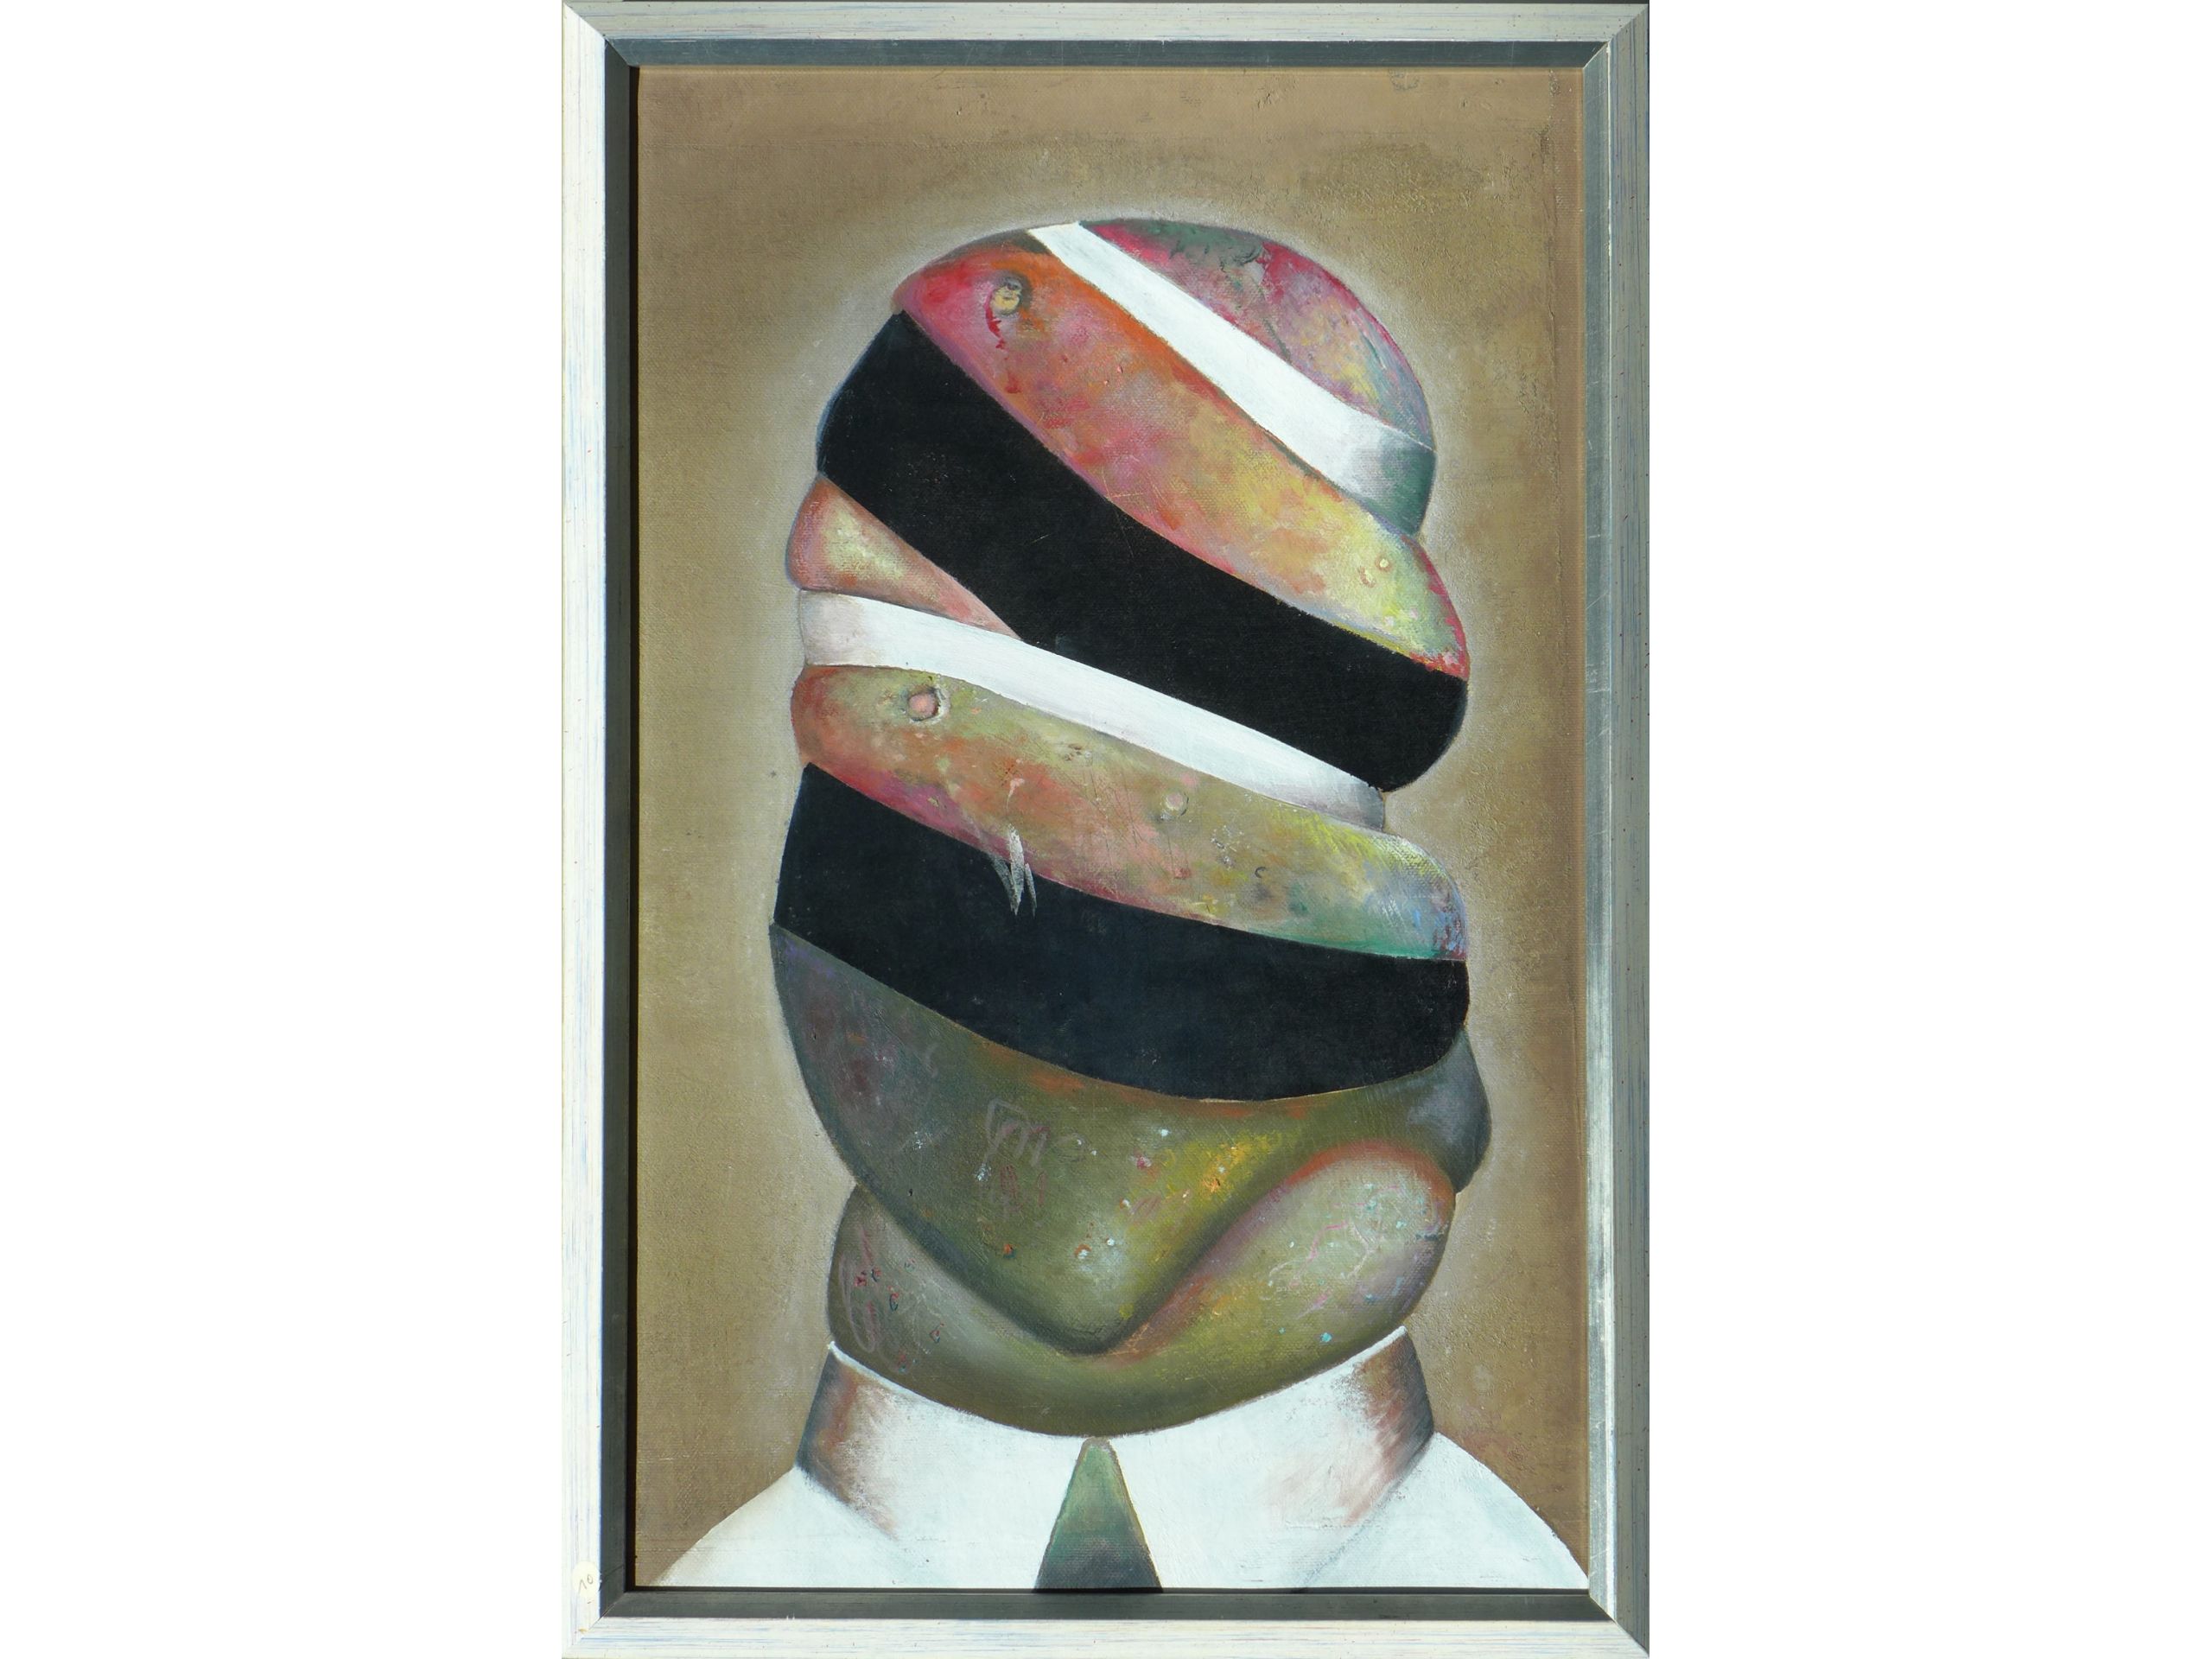 'Infizierter Kopf', 1987, Öl auf Leinwand, 50 x 32 cm, 220 €